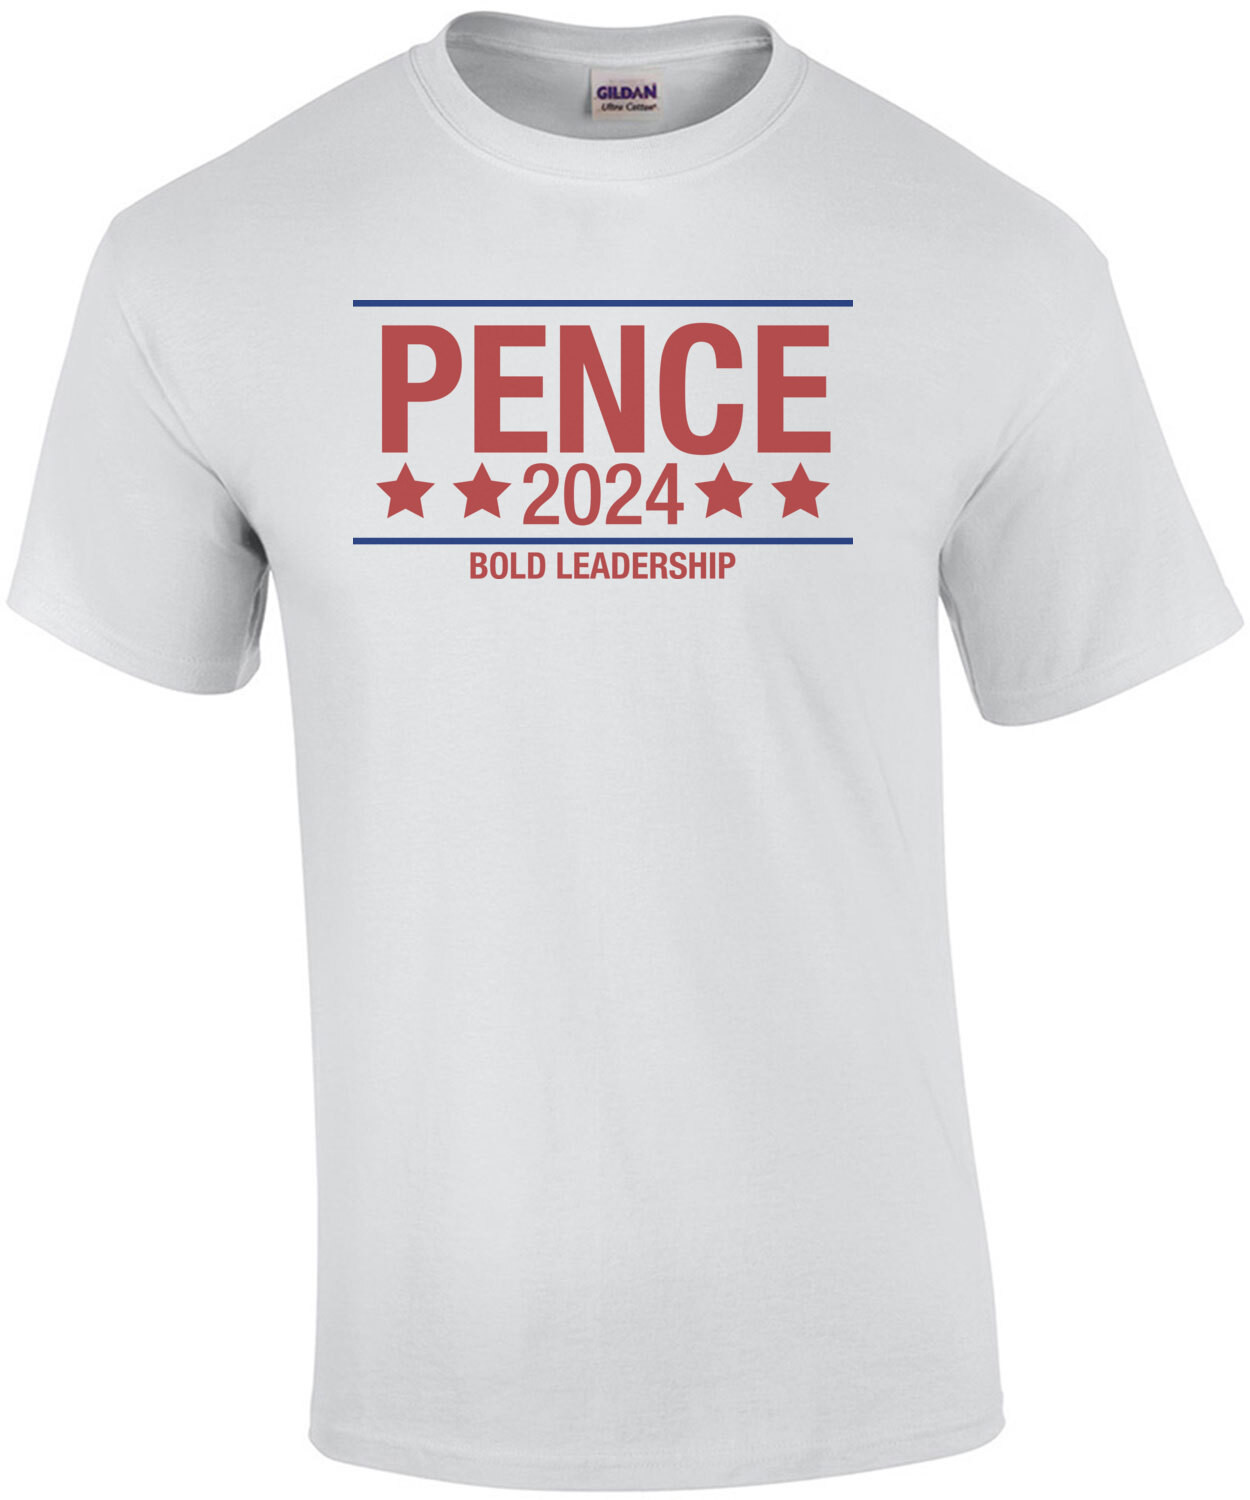 Pence 2024 Tested Leadership Shirt